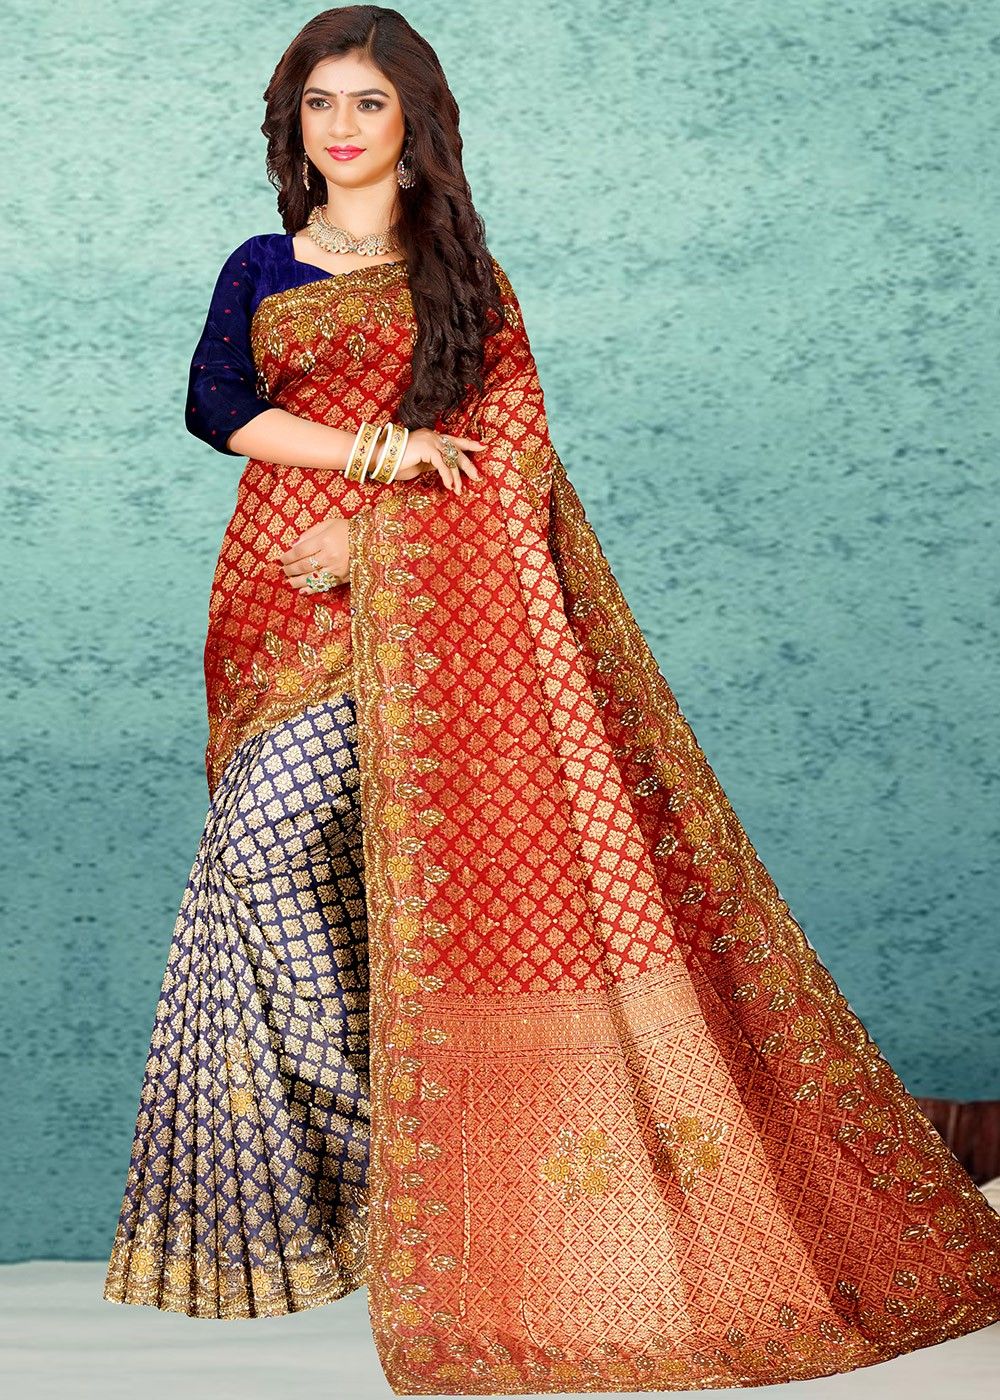 Tripura silk cotton half and half saree – www.vannamayil.com